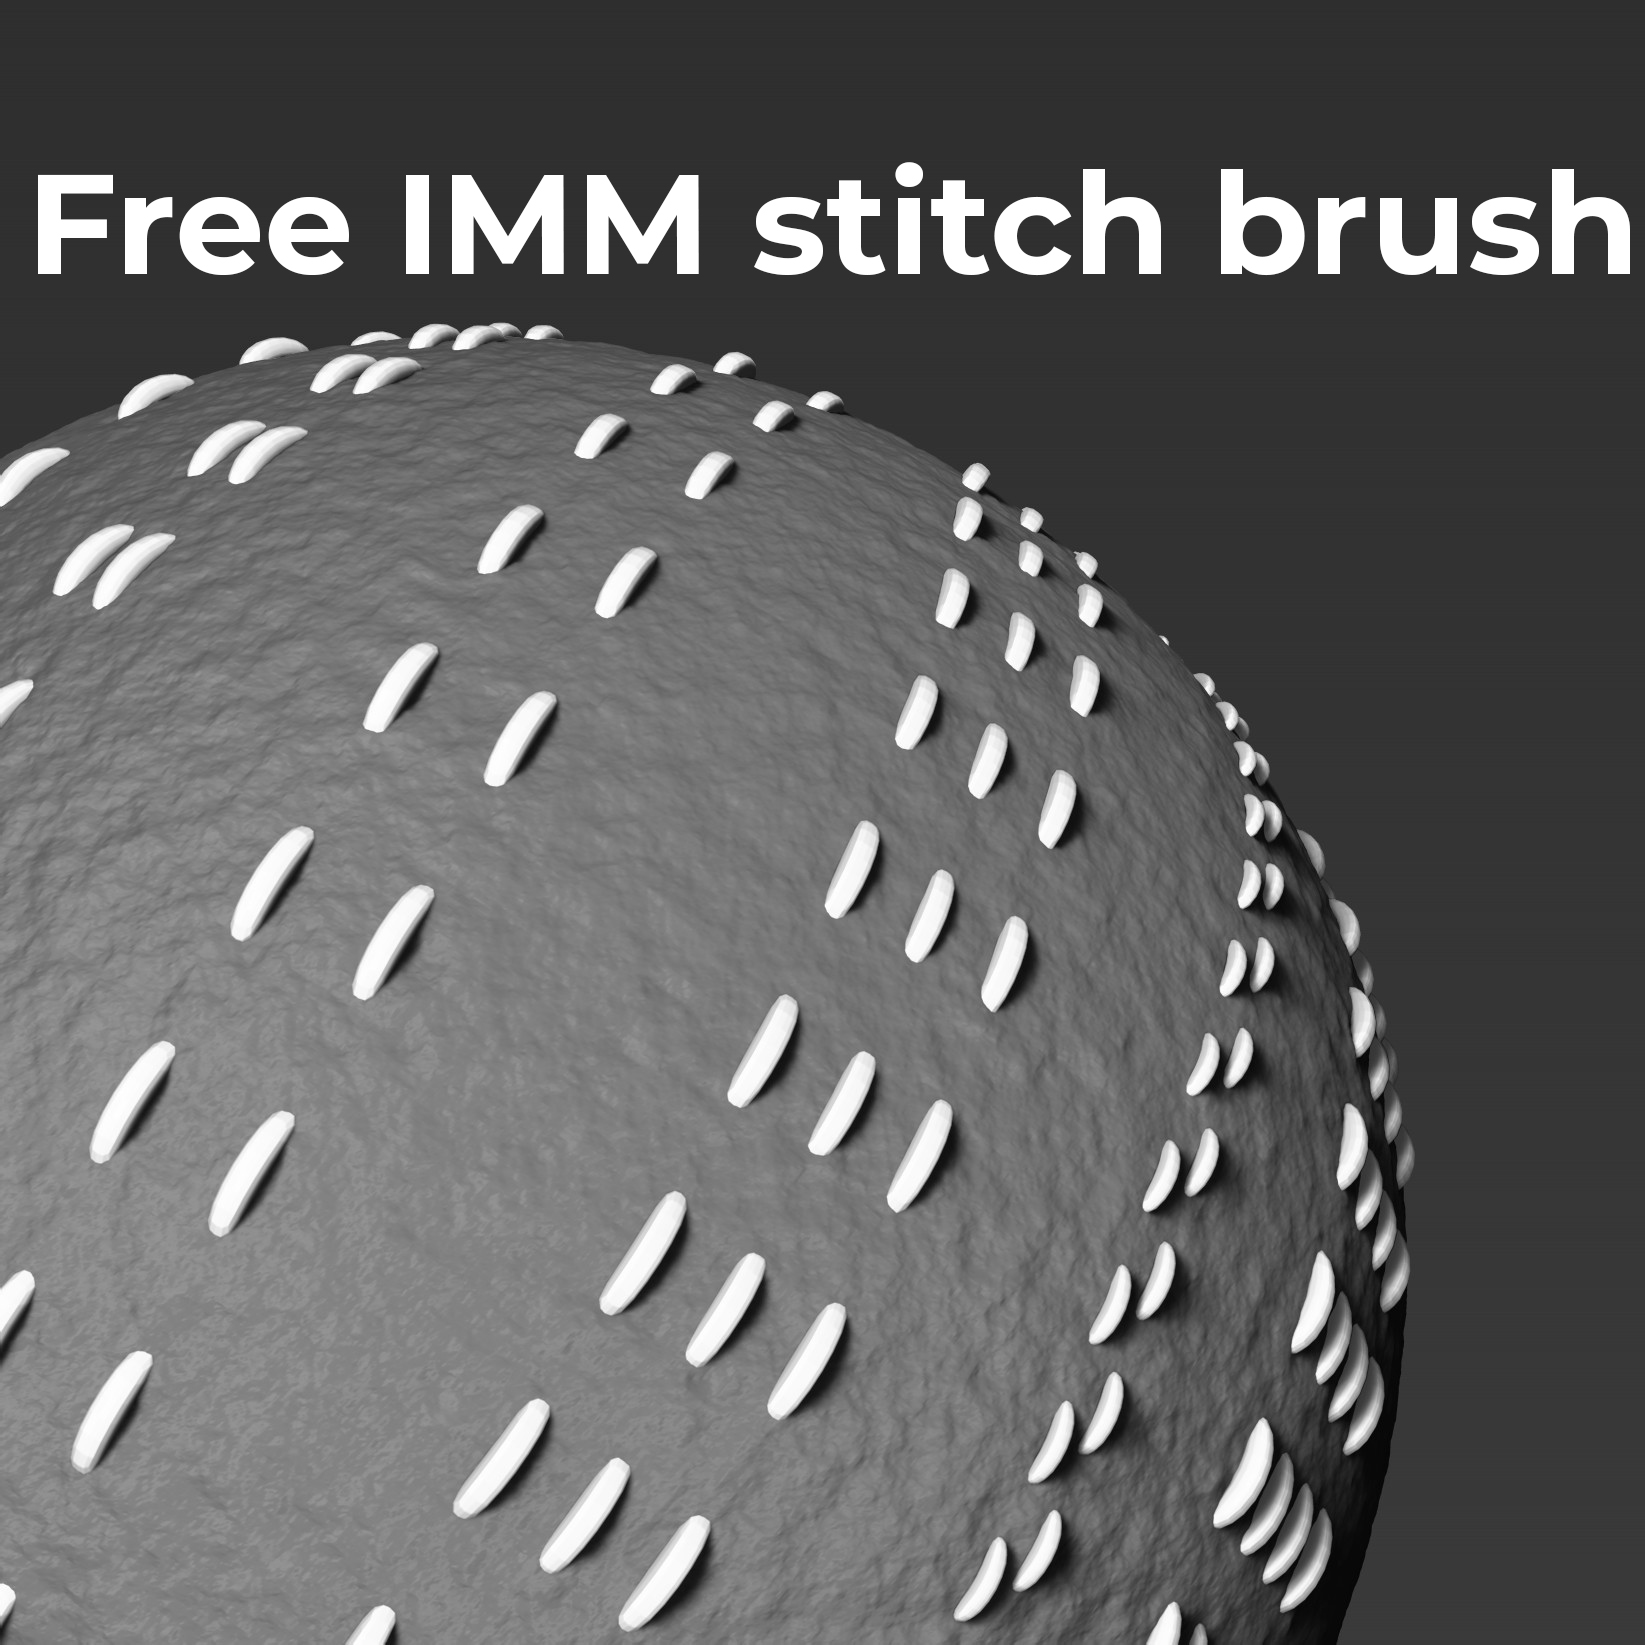 zbrush stitch brush free